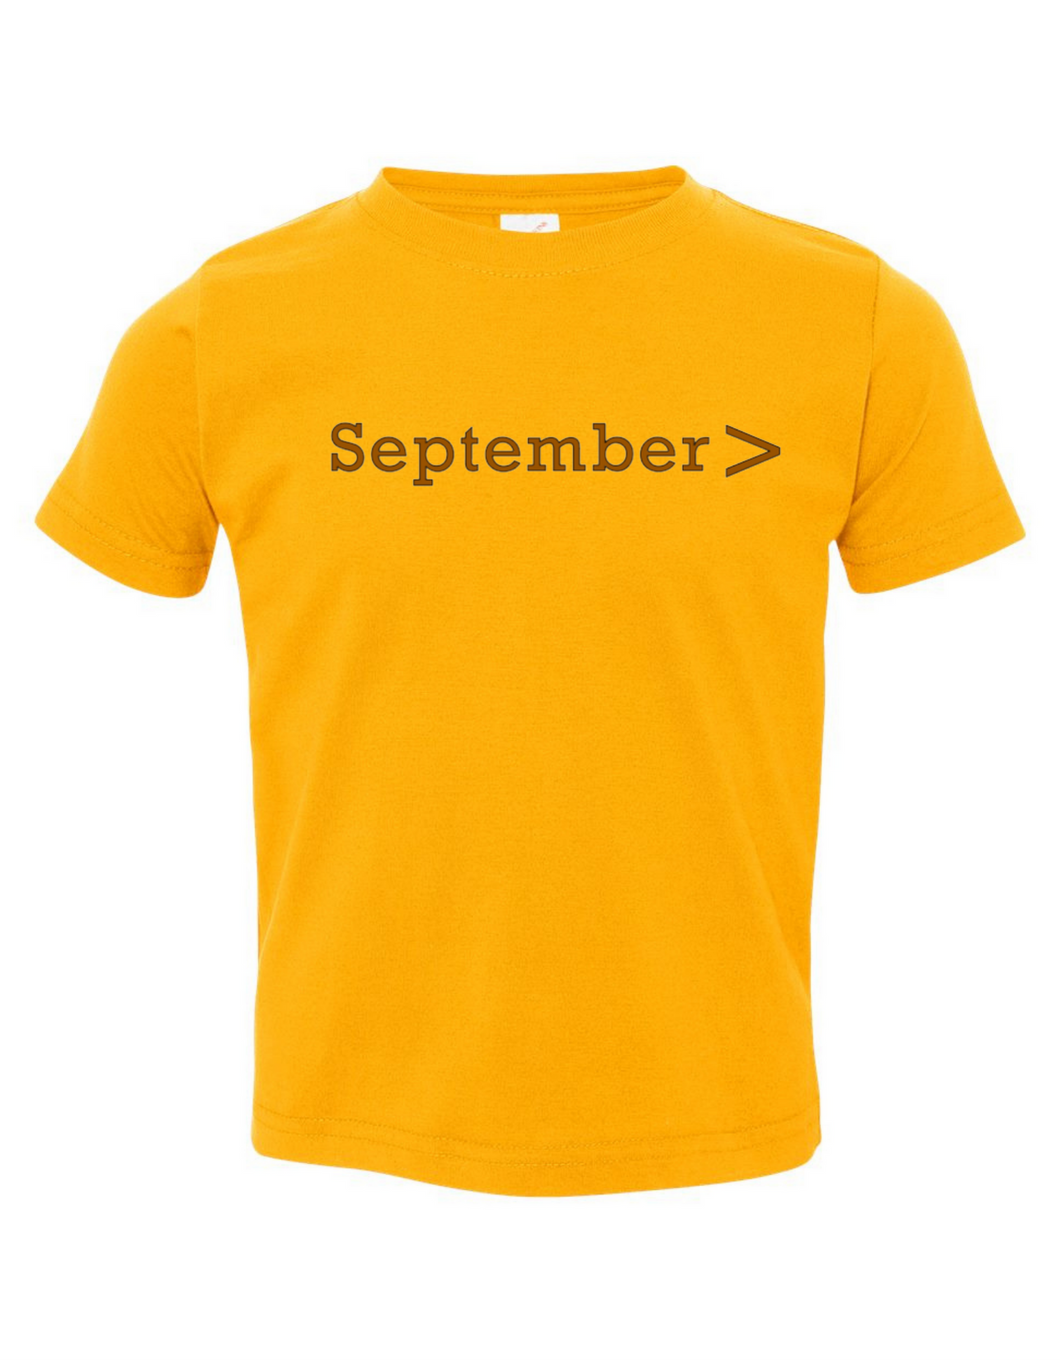 September is Greater 9T